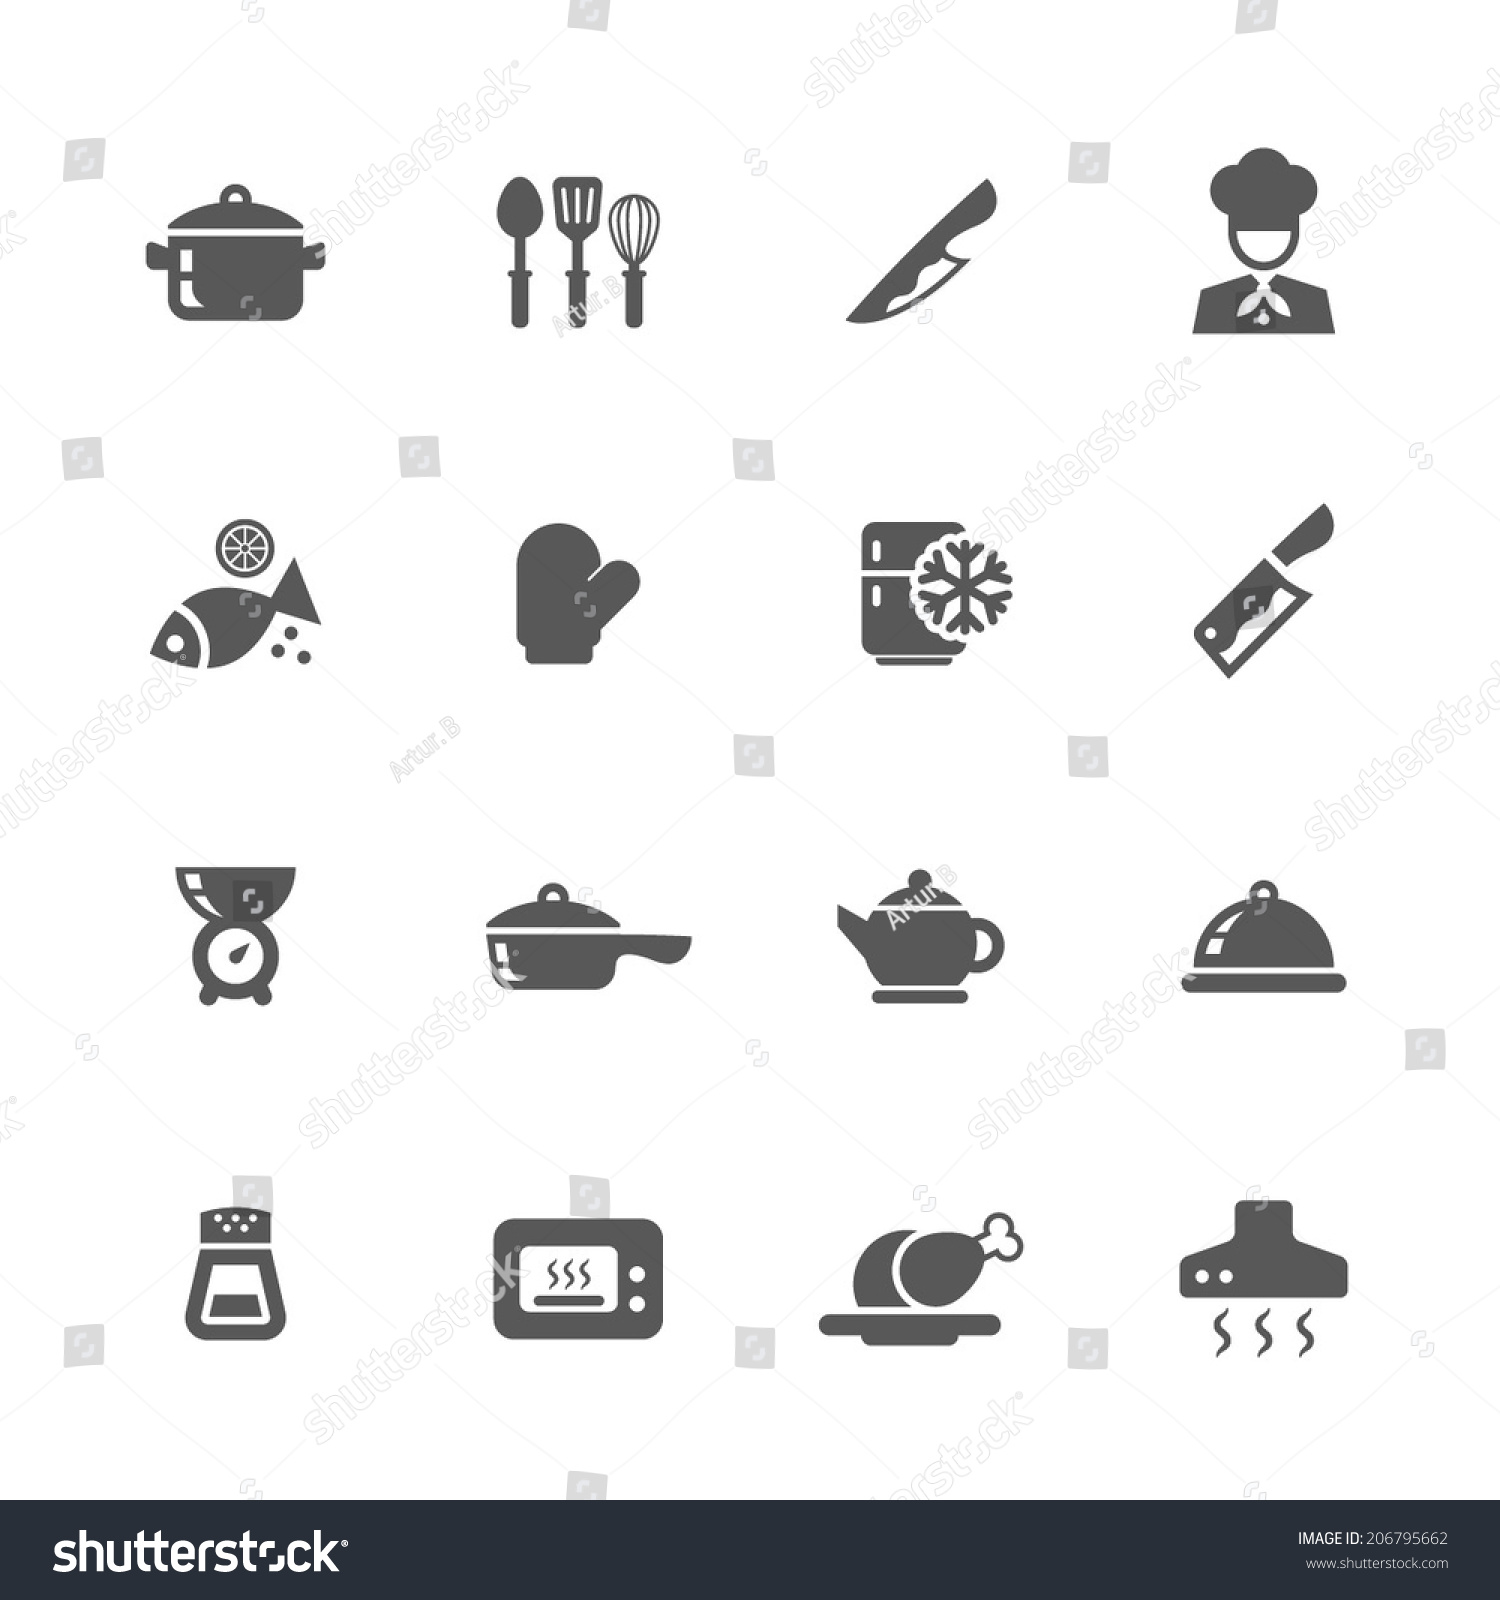 Kitchen Icons Set. Stock Vector Illustration 206795662 : Shutterstock